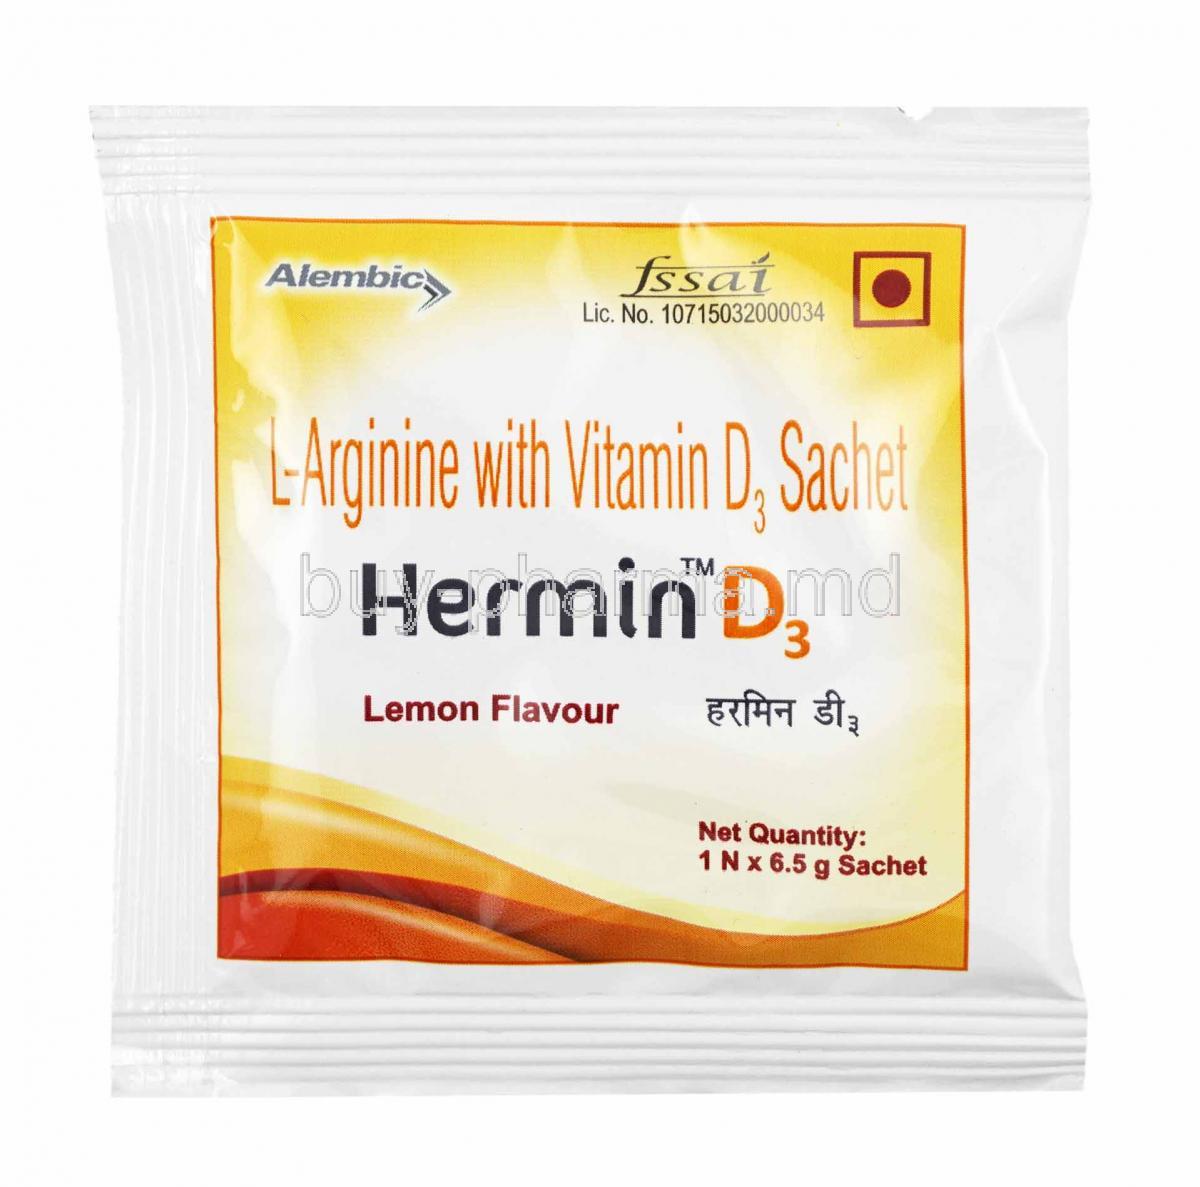 Hermin D3 Powder, L-Arginine and Vitamin D3 sachet